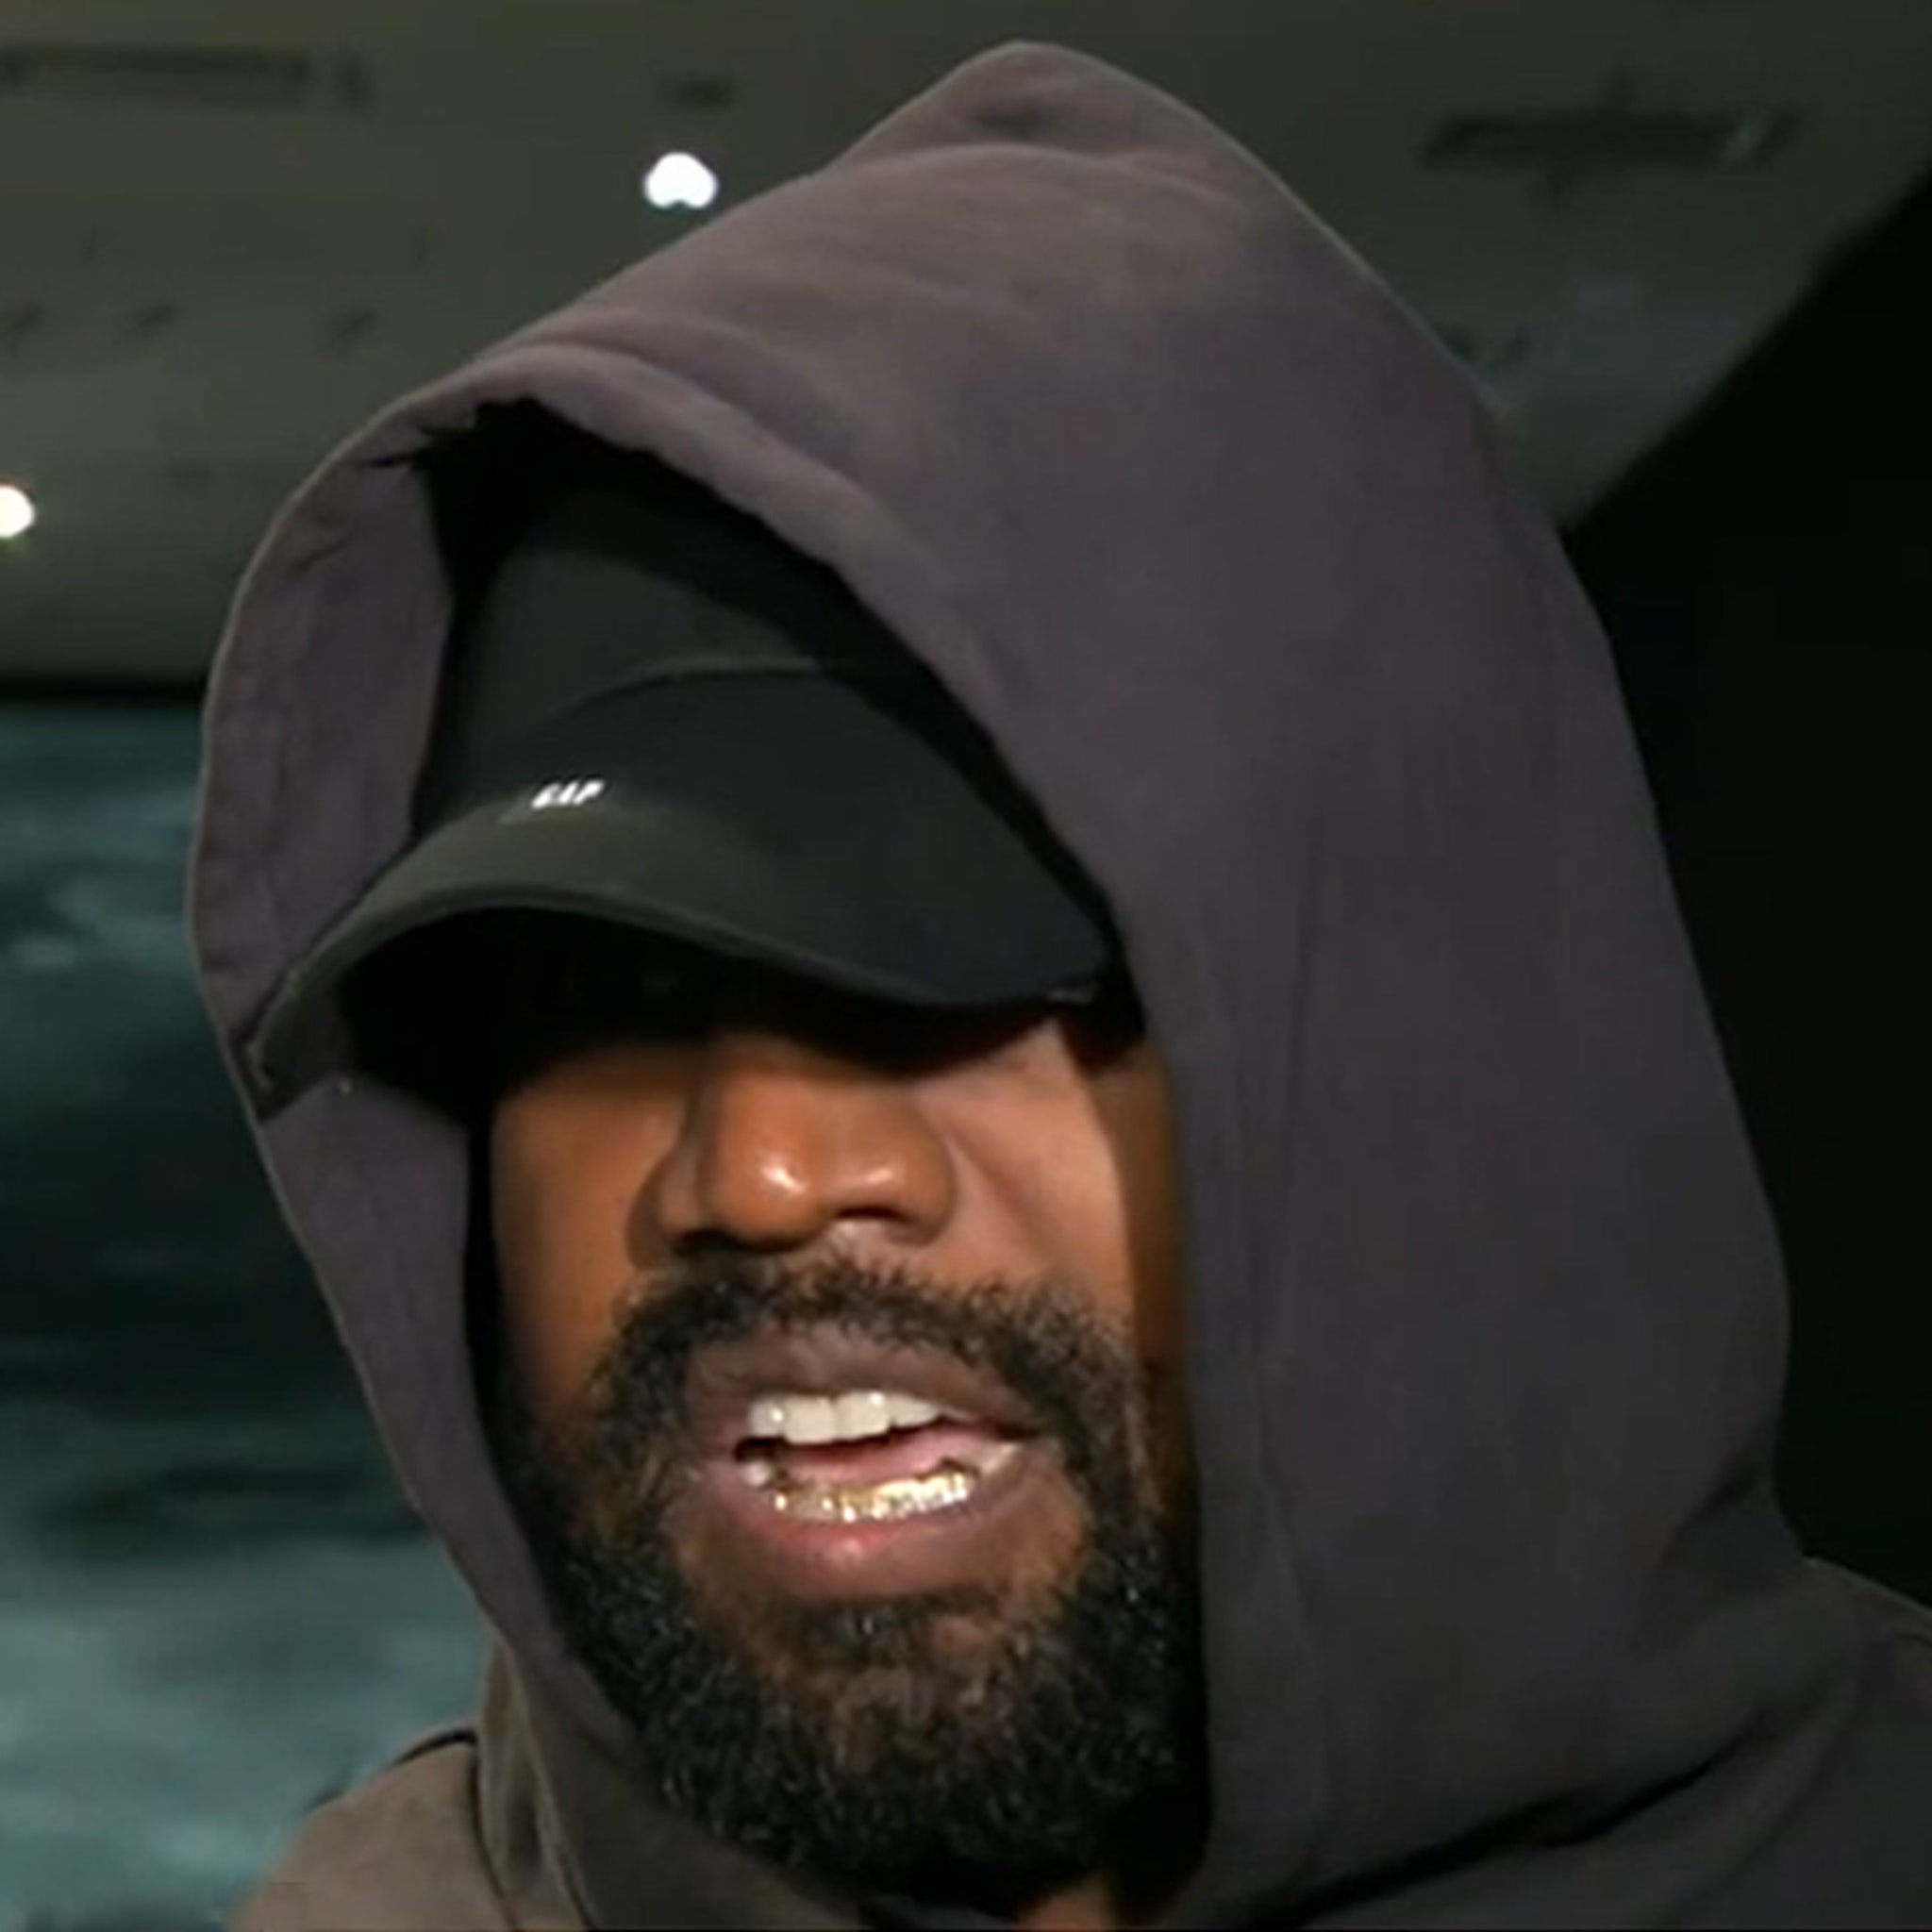 Kanye West won't 'apologize' for Yeezy Gap 'trash bag' displays